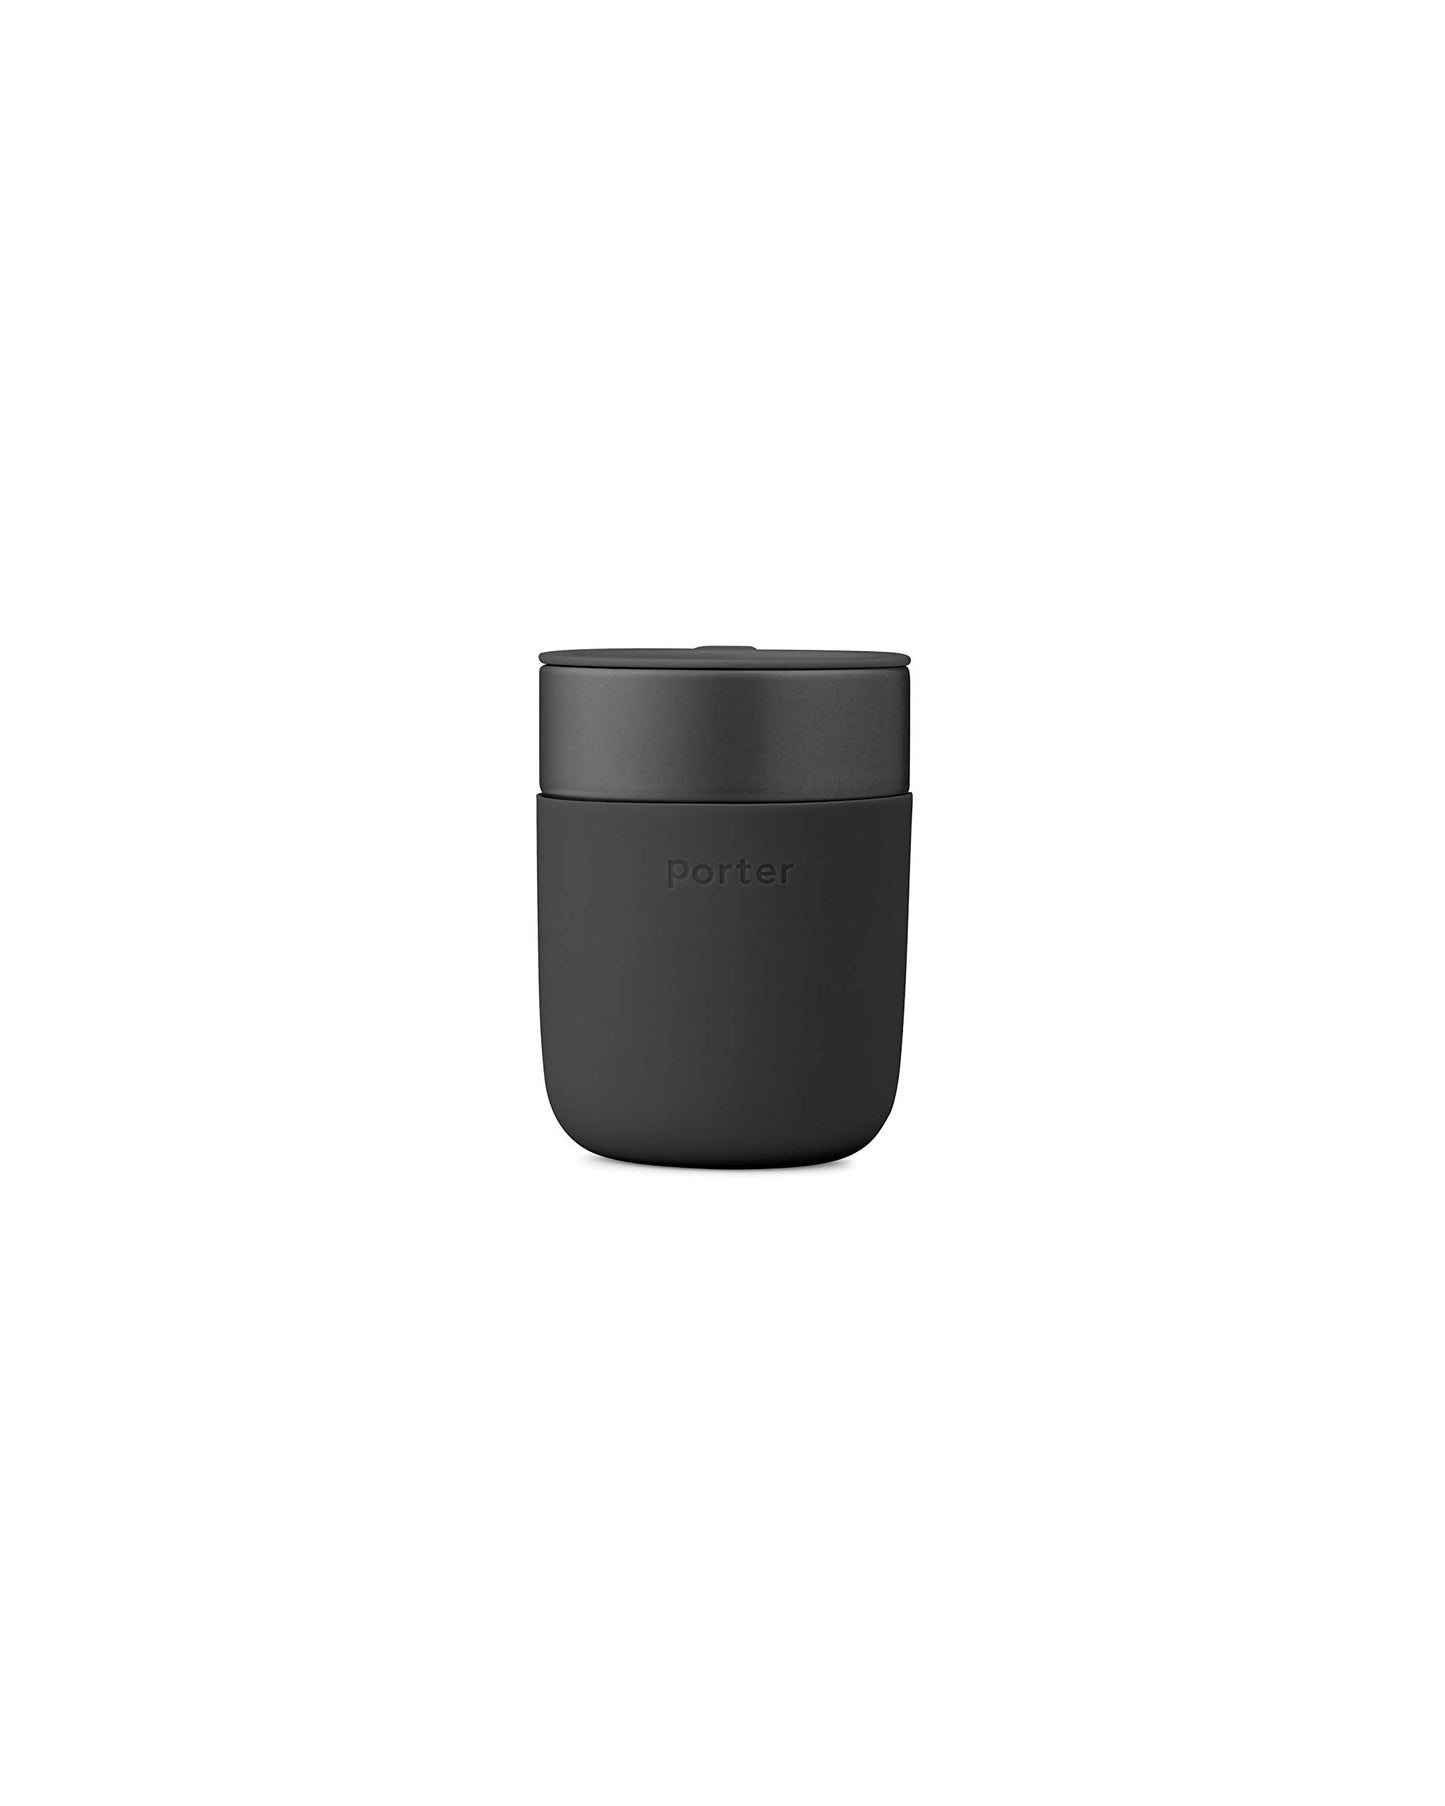 W&P Porter Travel Coffee Mug with Protective Silicone Sleeve